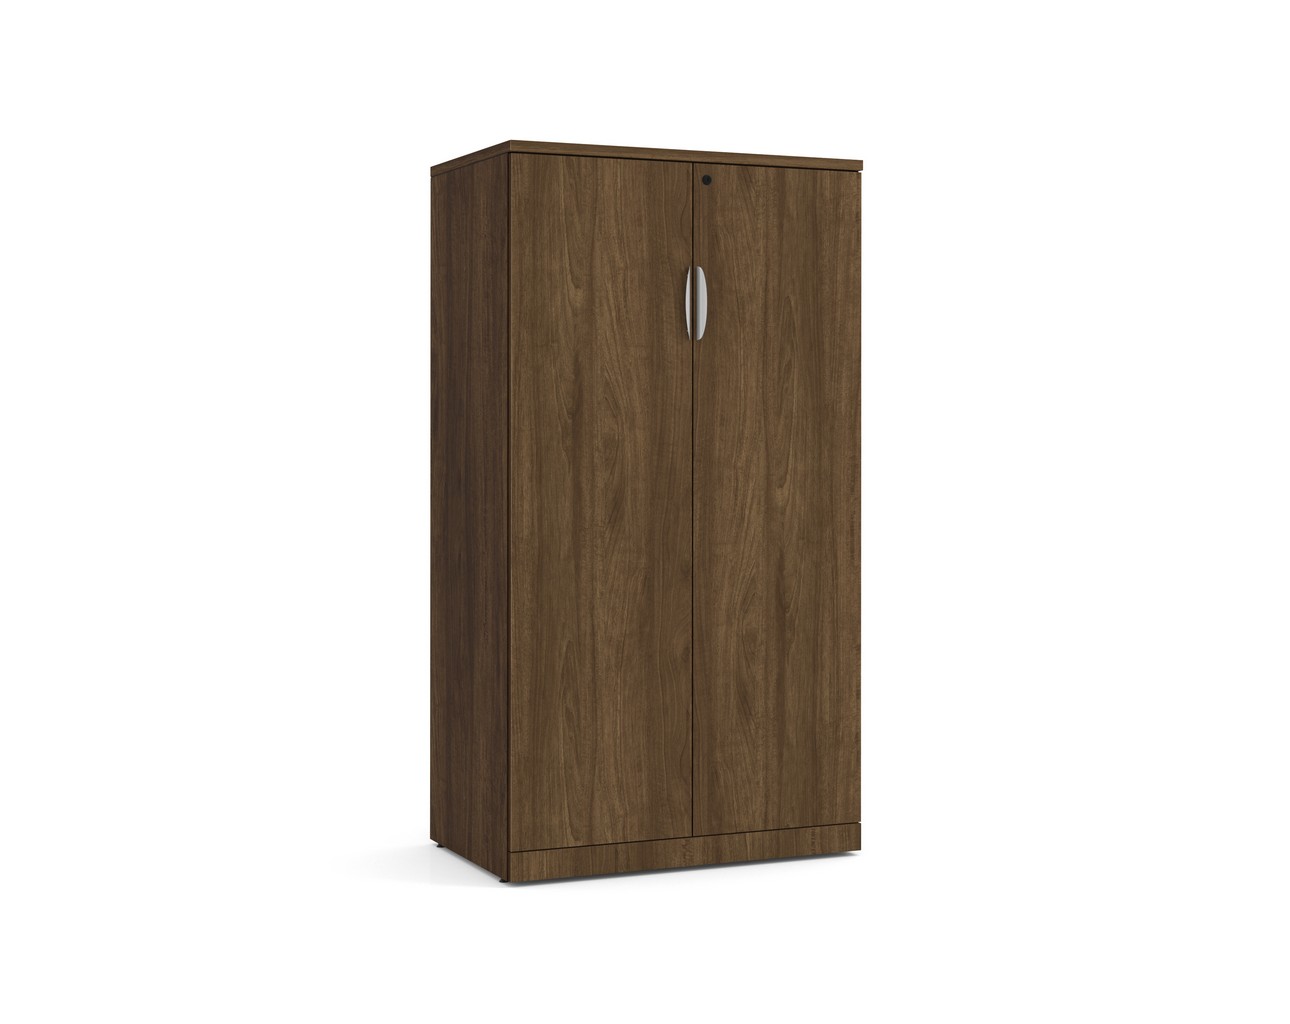 Locking Double Door Storage Cabinet 65 Inch with Modern Walnut Finish